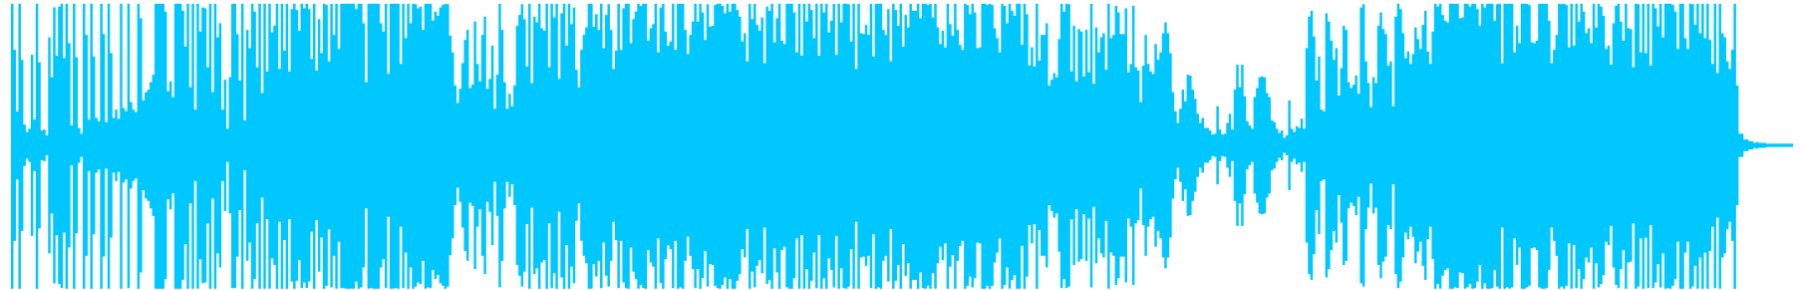 A blue FL STUDIO 21 START UP TEMPLATE sound wave on a green background.